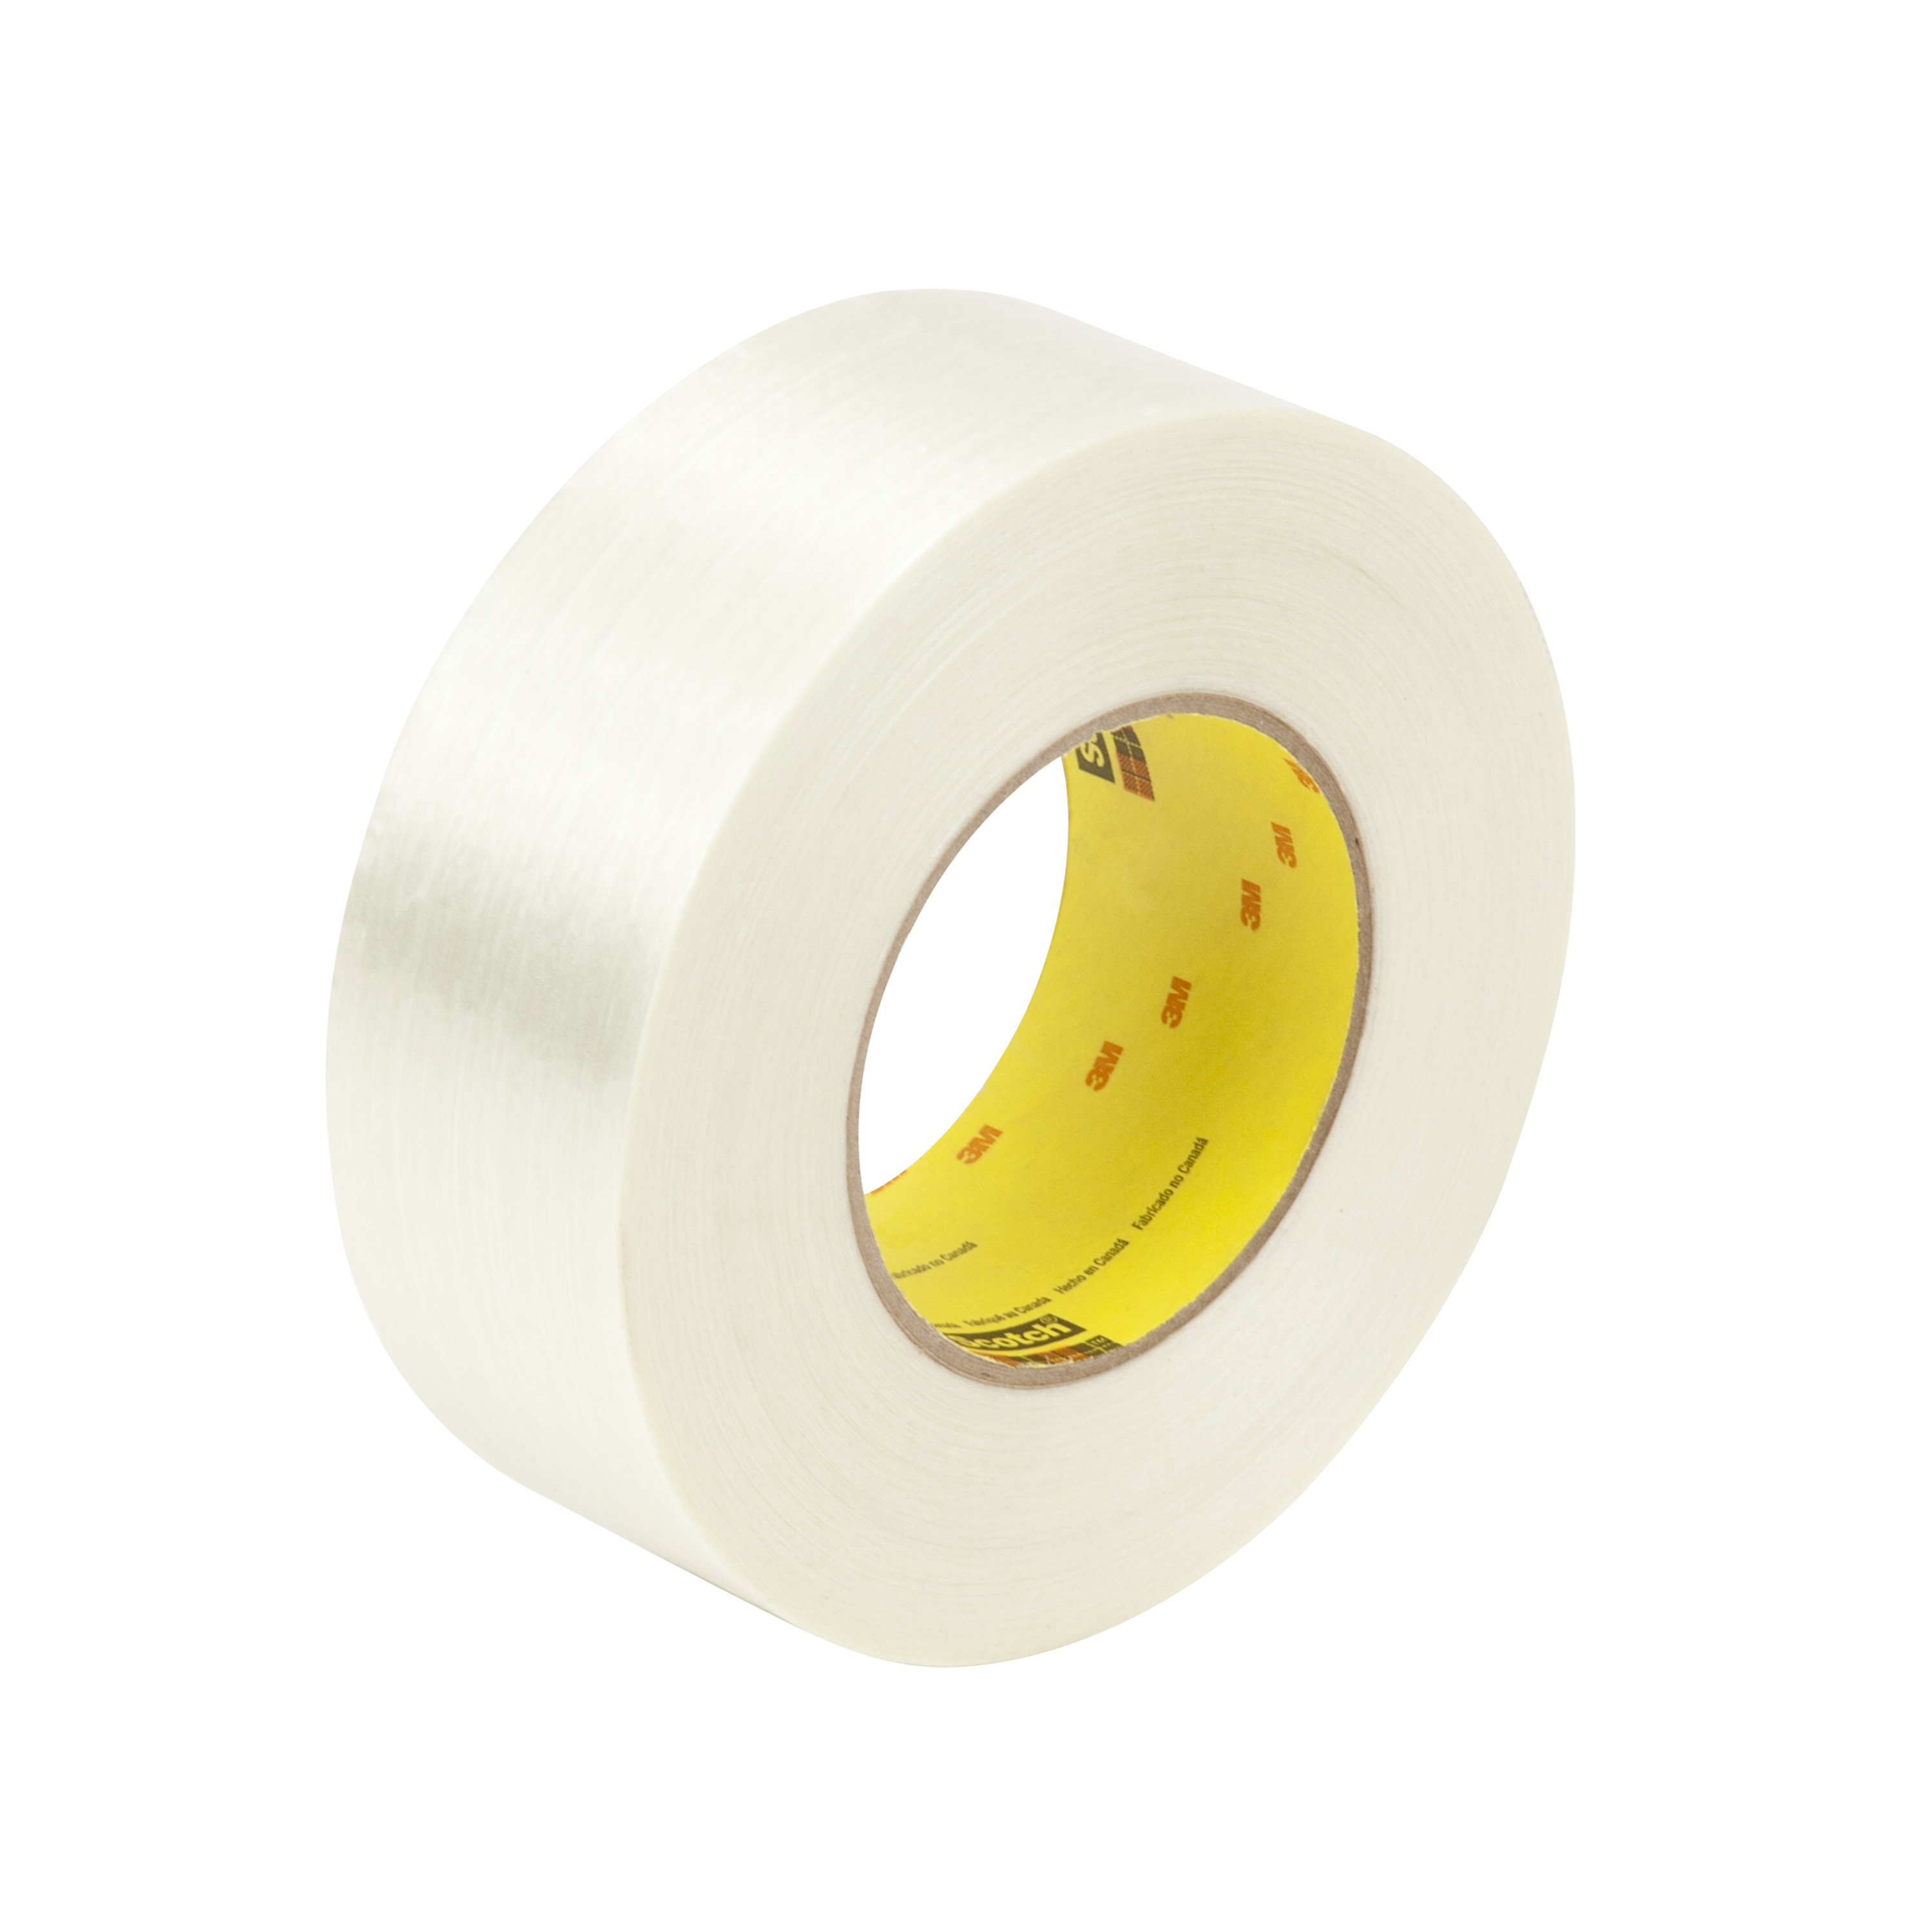 Scotch® Filament Tape 890MSR, Clear, 96 mm x 55 m, 8 mil, 12 rolls per
case